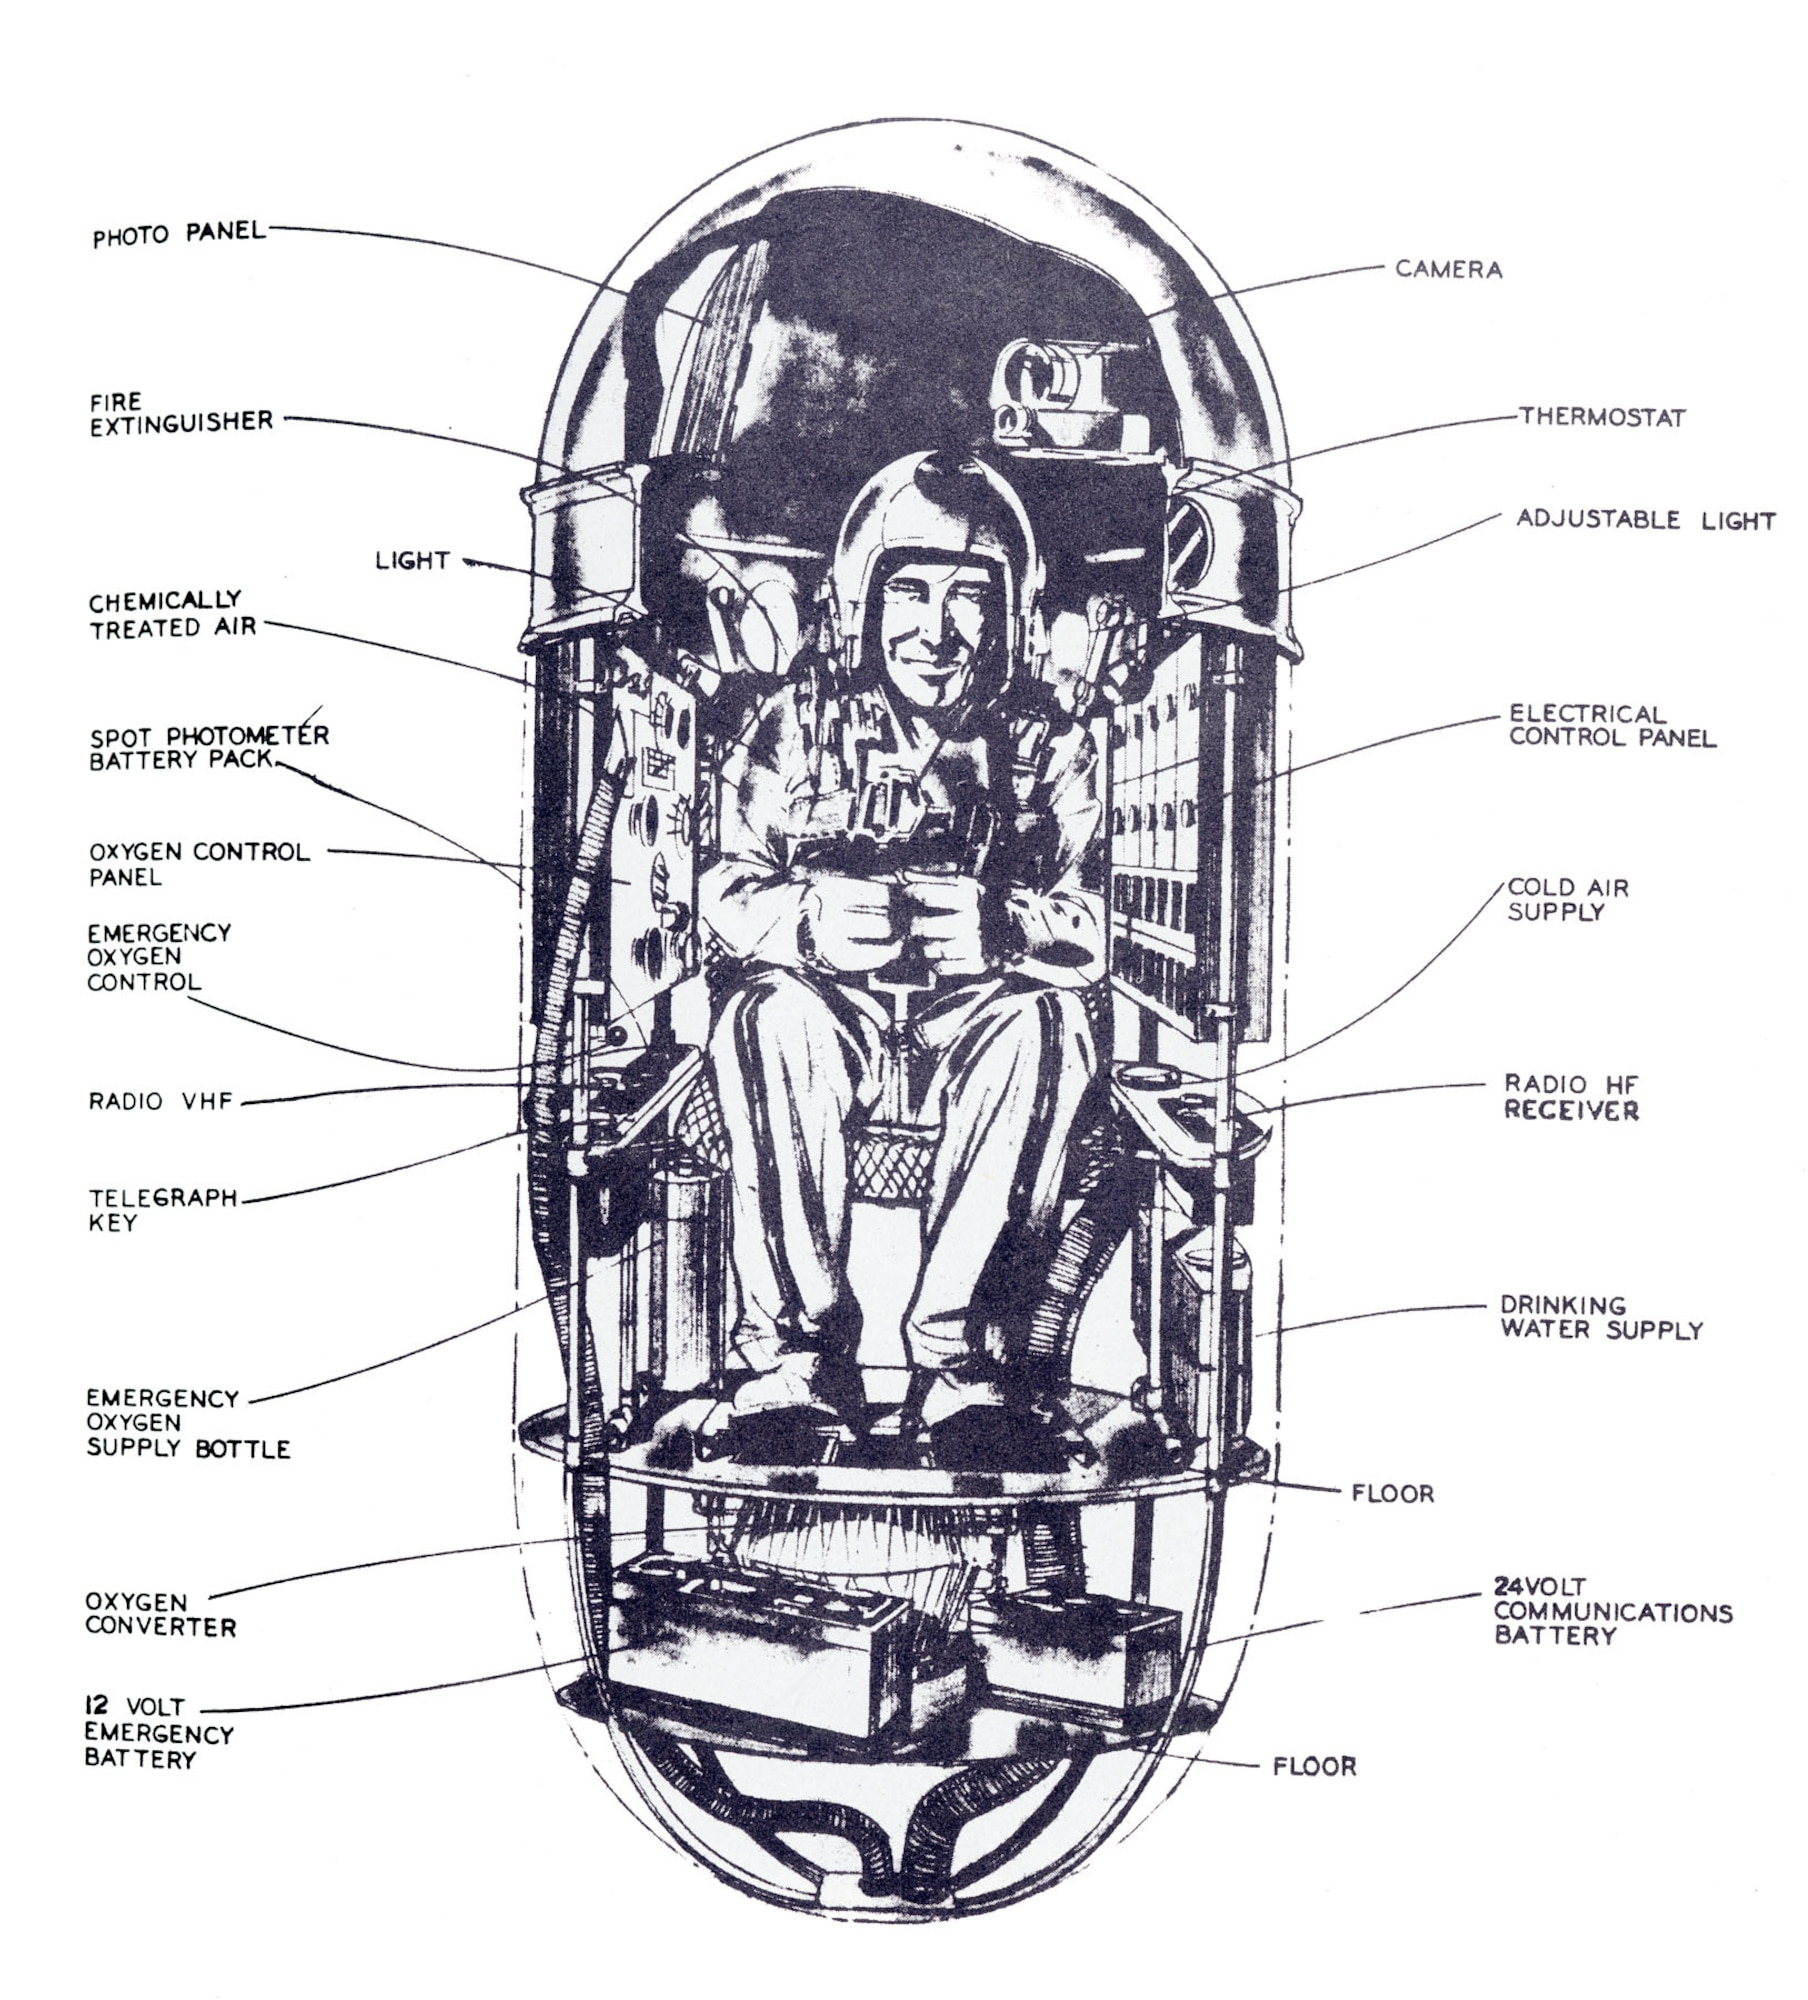 Illustration of the Man High gondola. (U.S. Air Force photo)